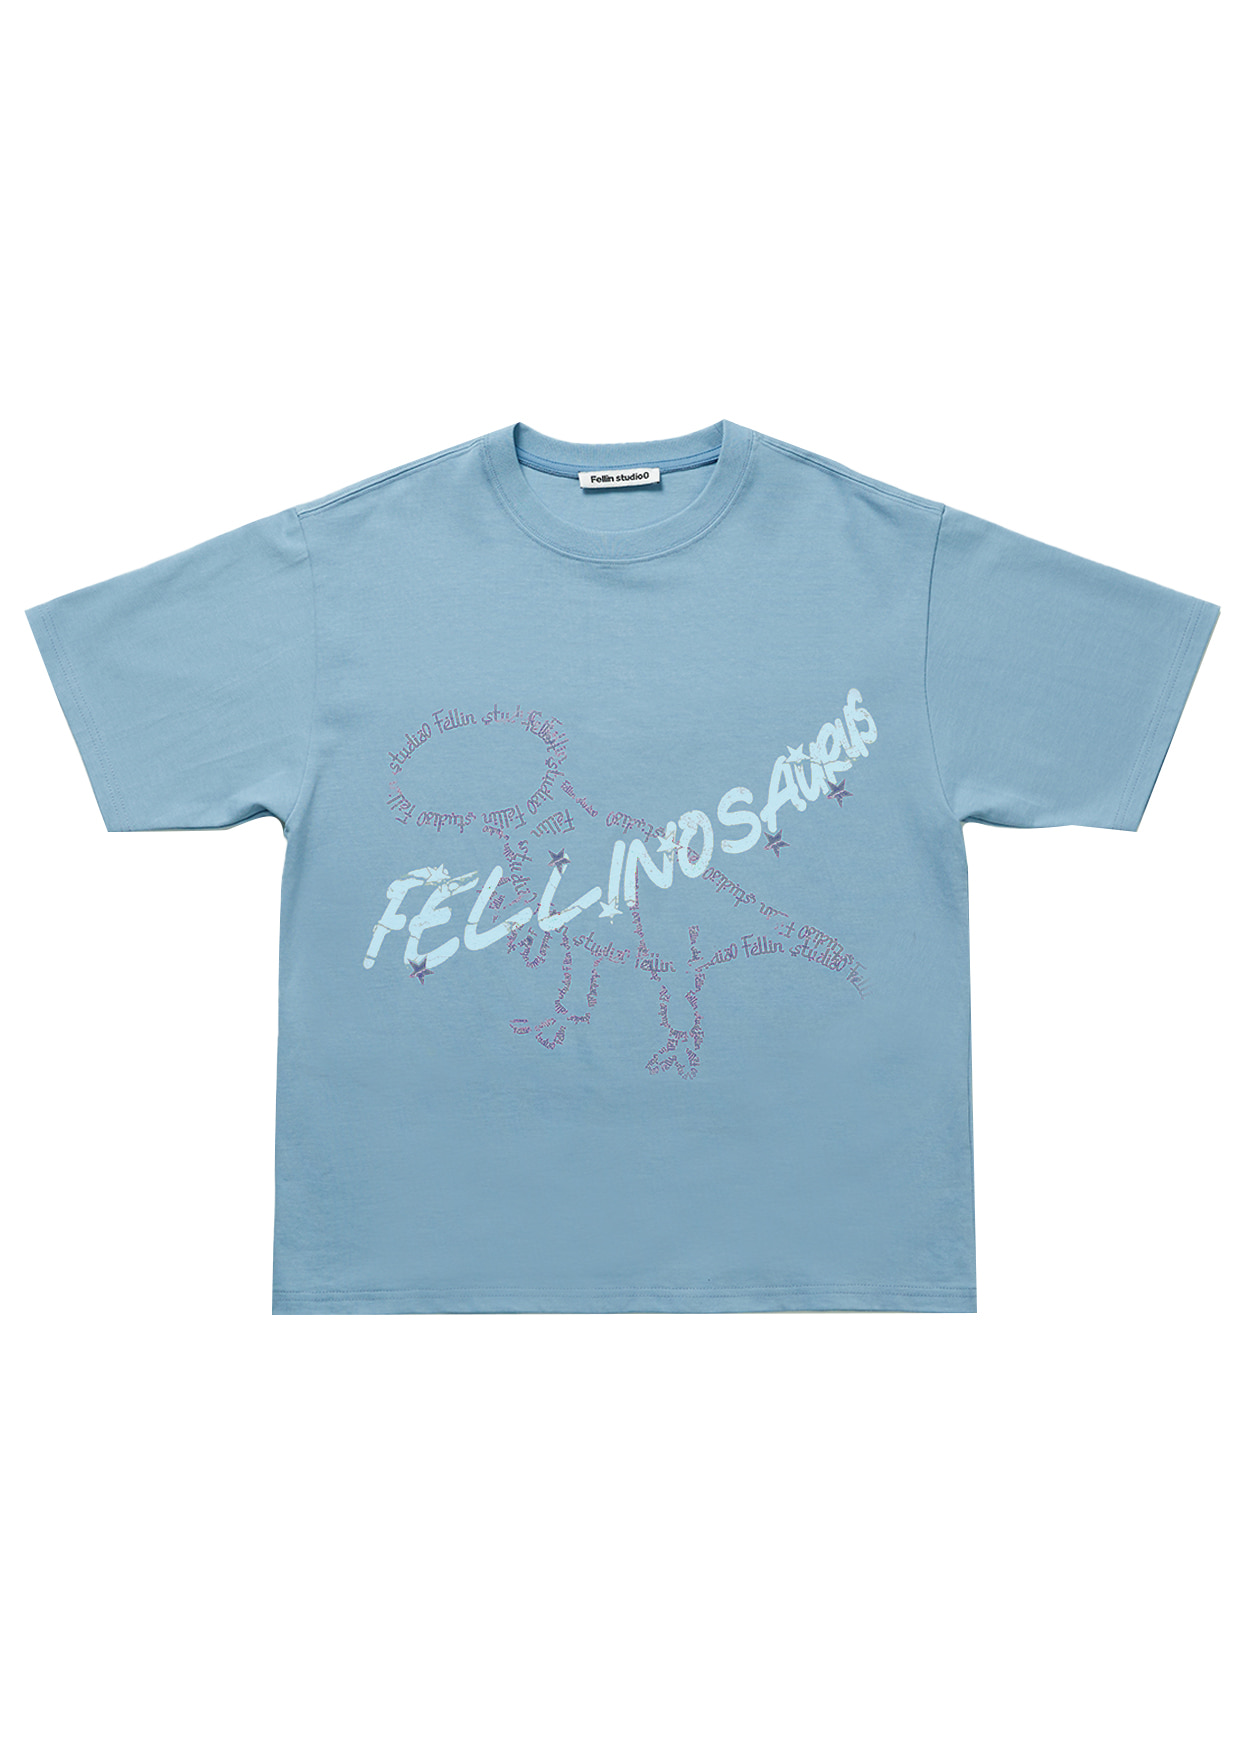 Fellinosaurus T-Shirt Turquoise